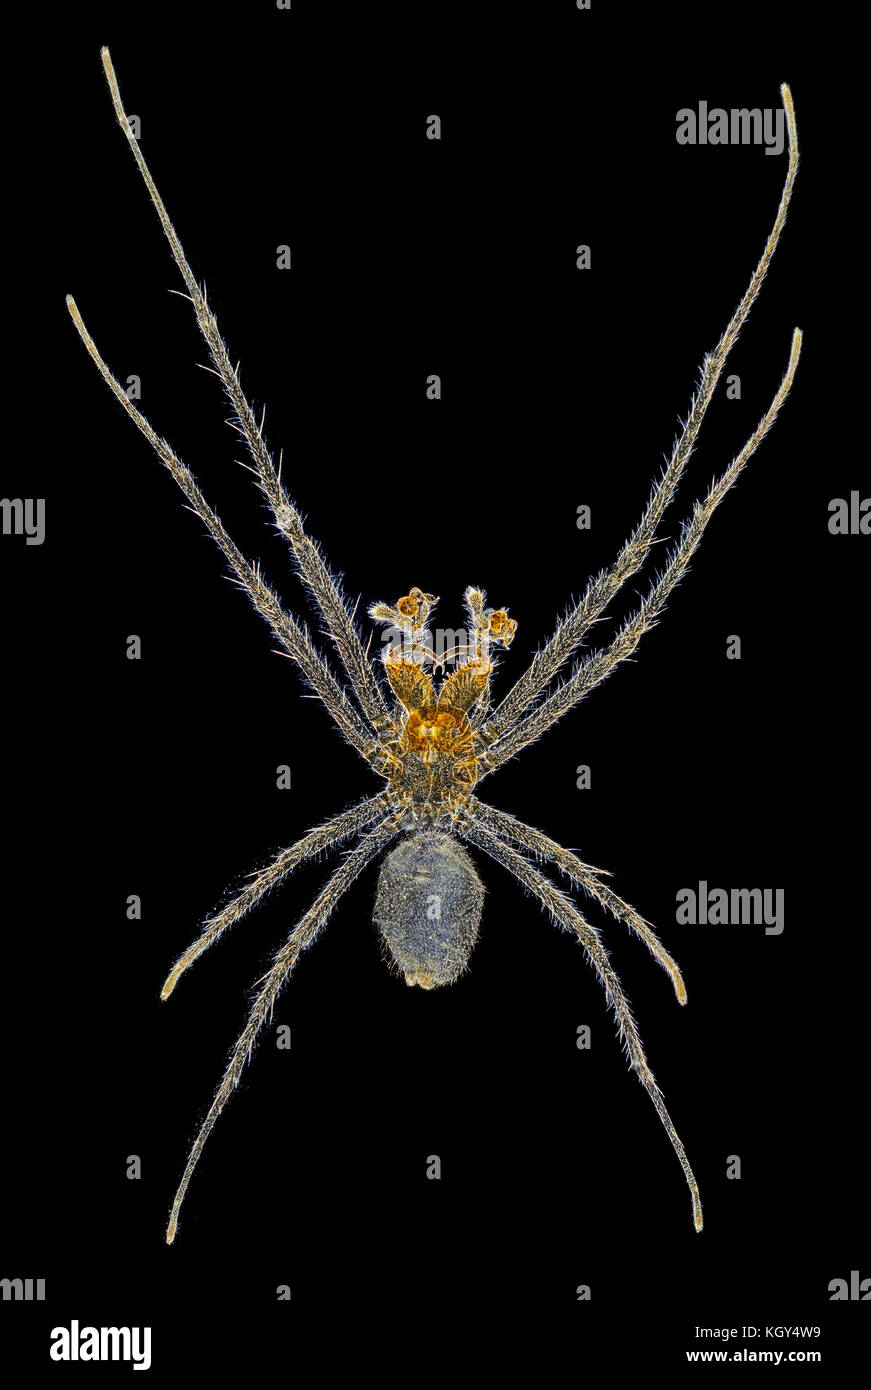 Spider, Tetragnatha sp. Darkfield macro photograph Stock Photo